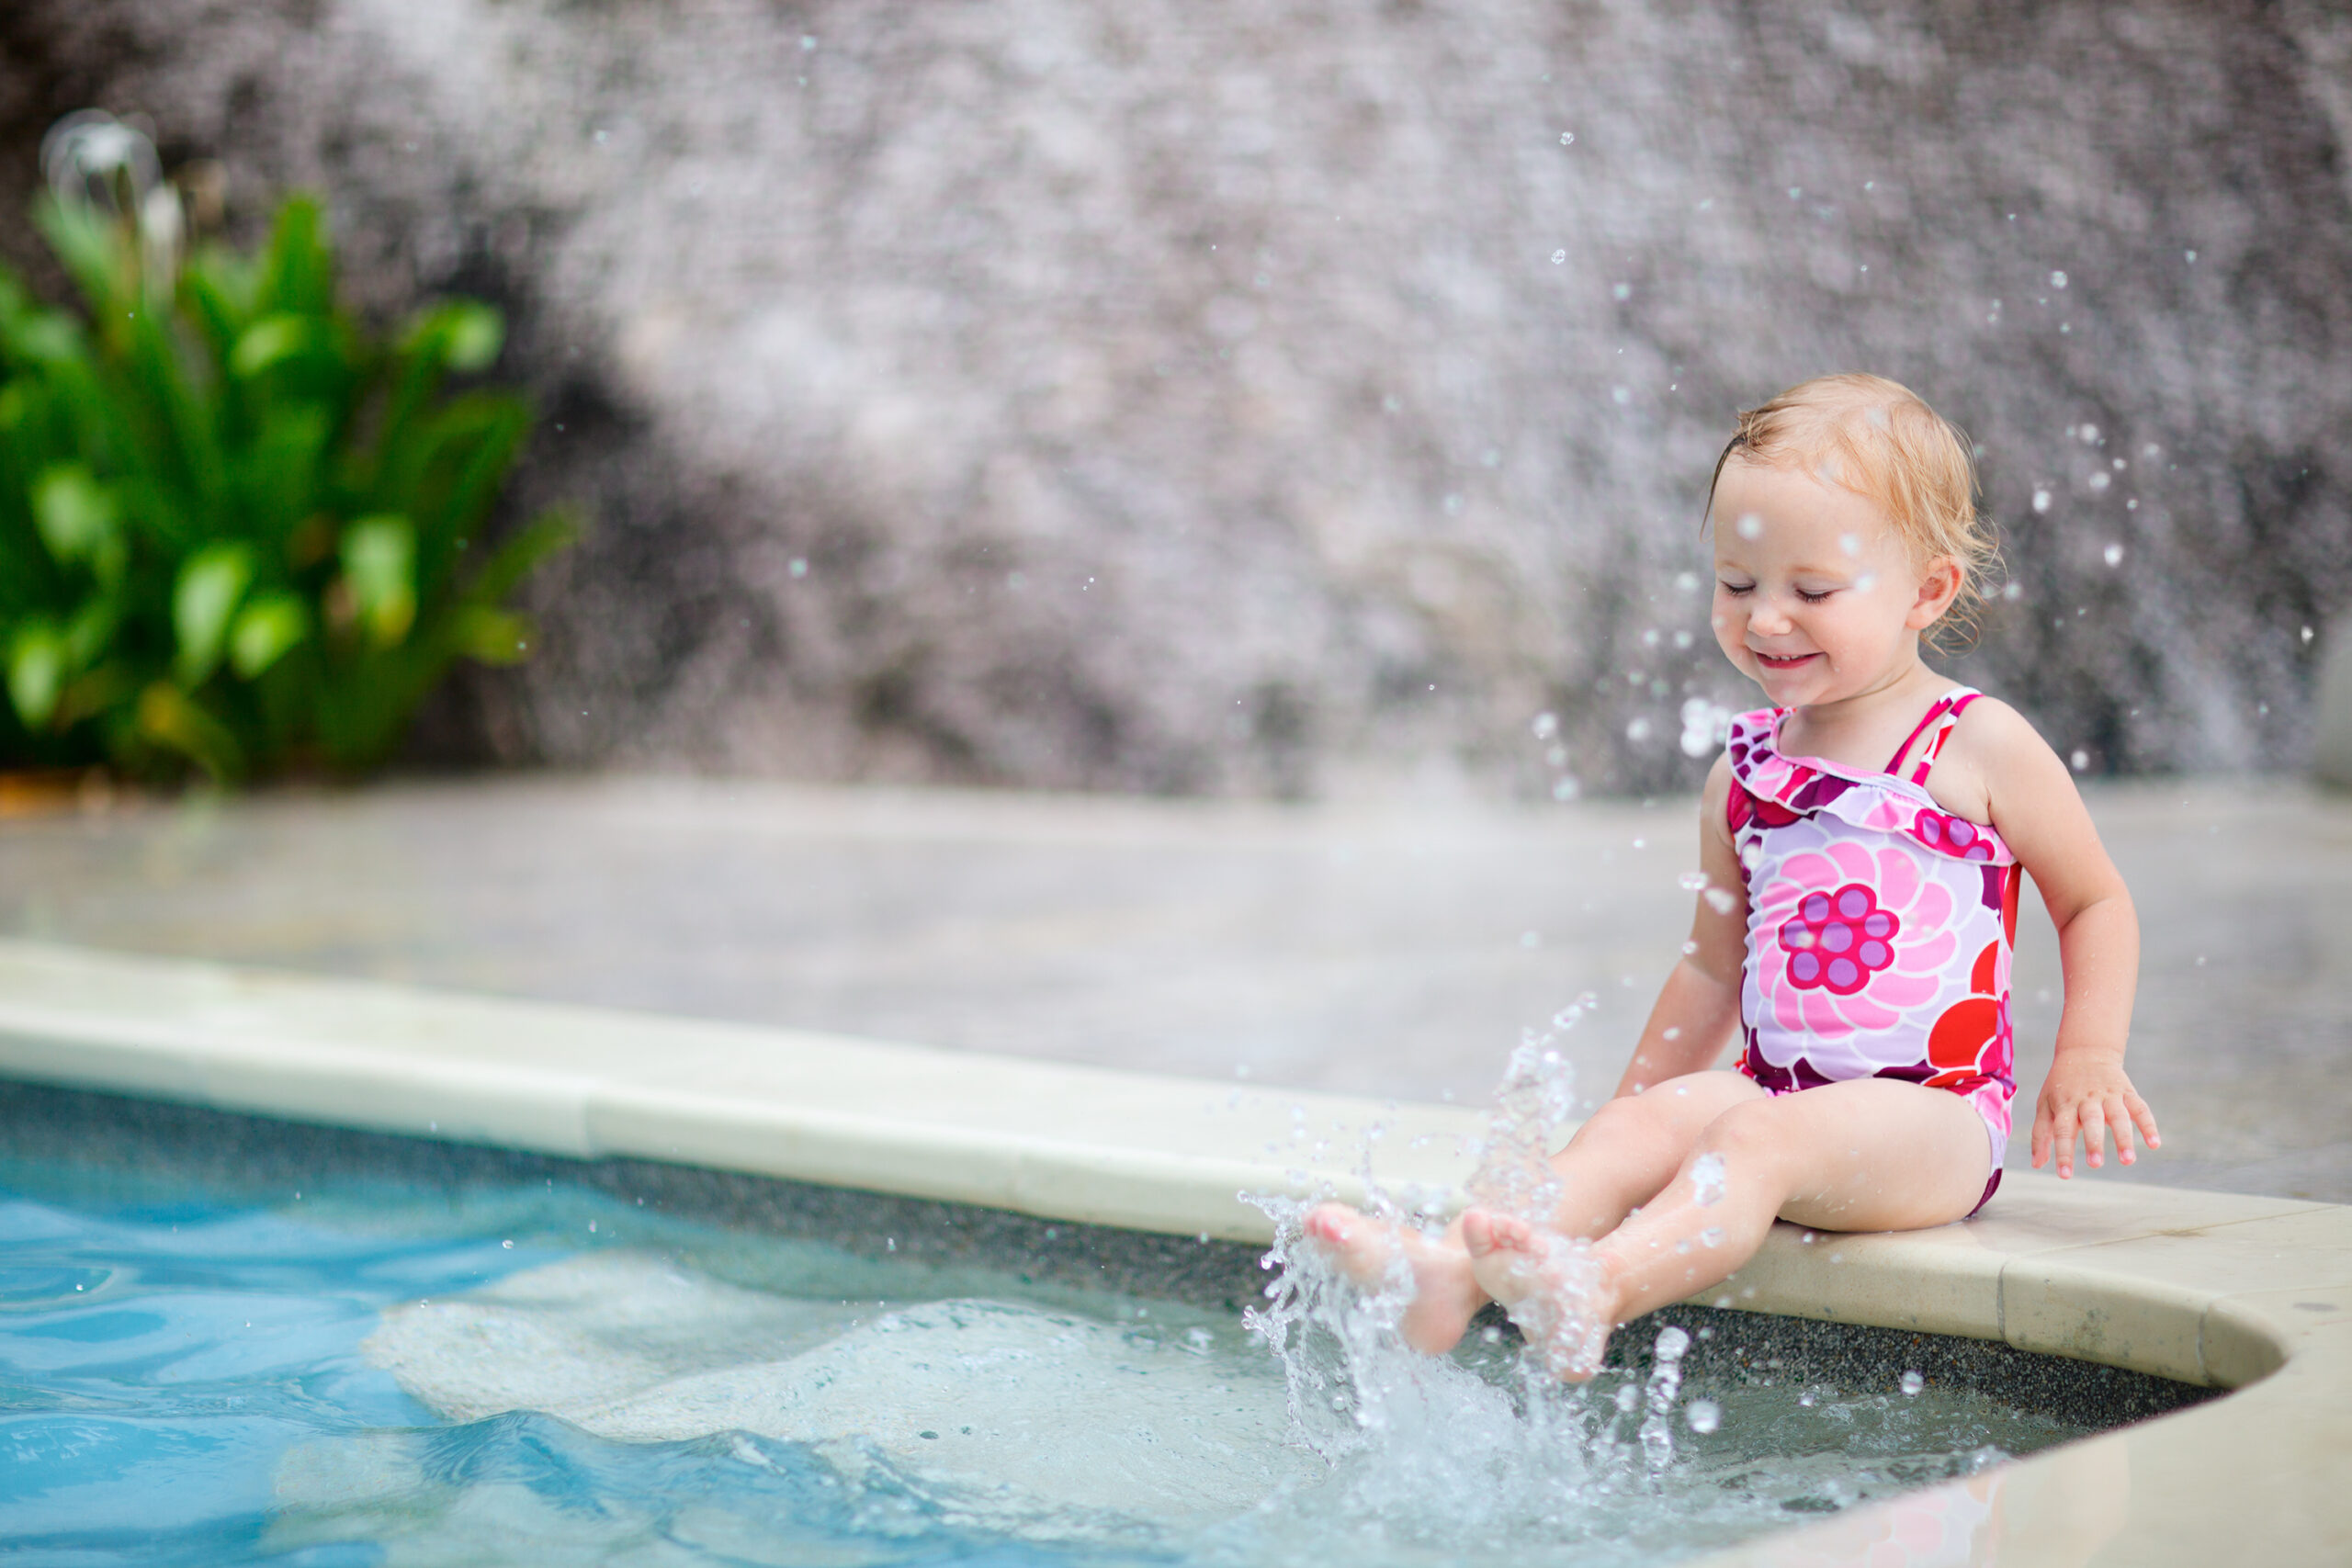 A baby joyfully splashing water using her feet in a pool